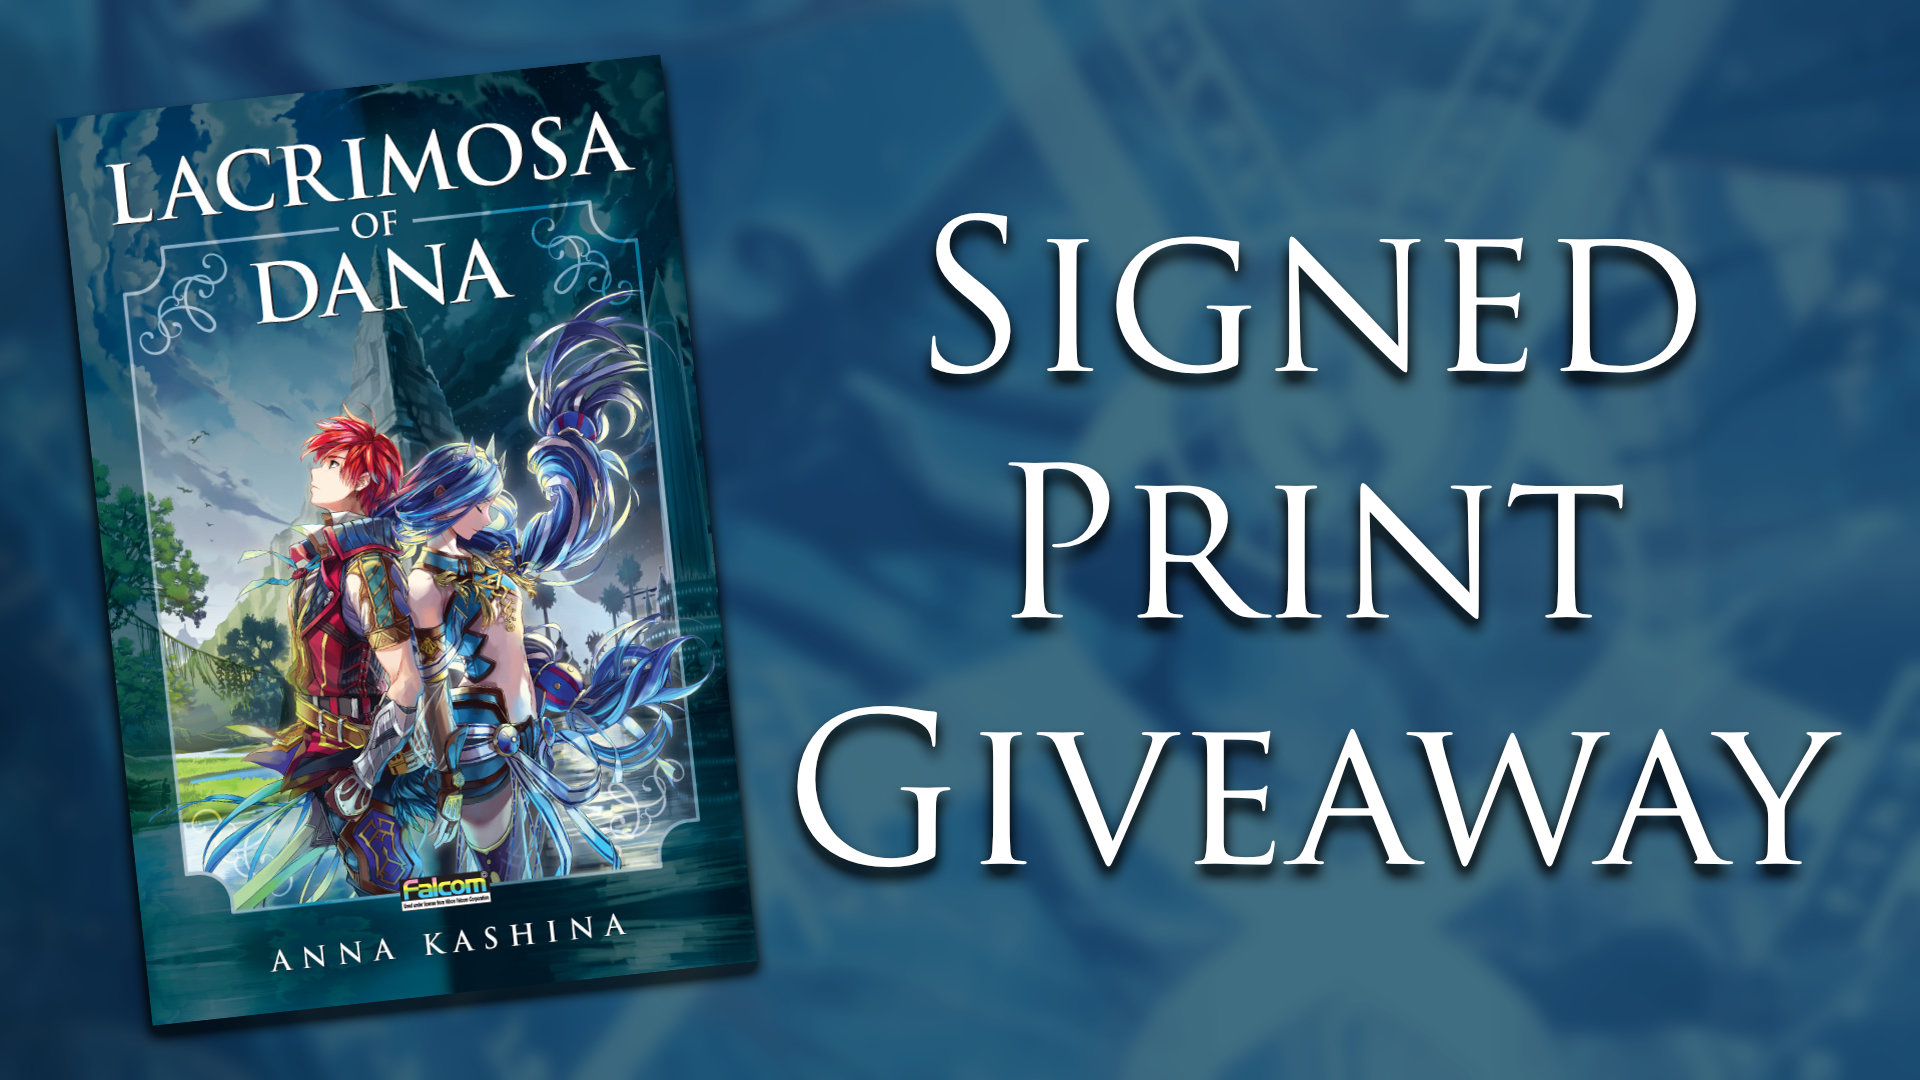 Ys VIII: Lacrimosa of Dana Signed Print Giveaway